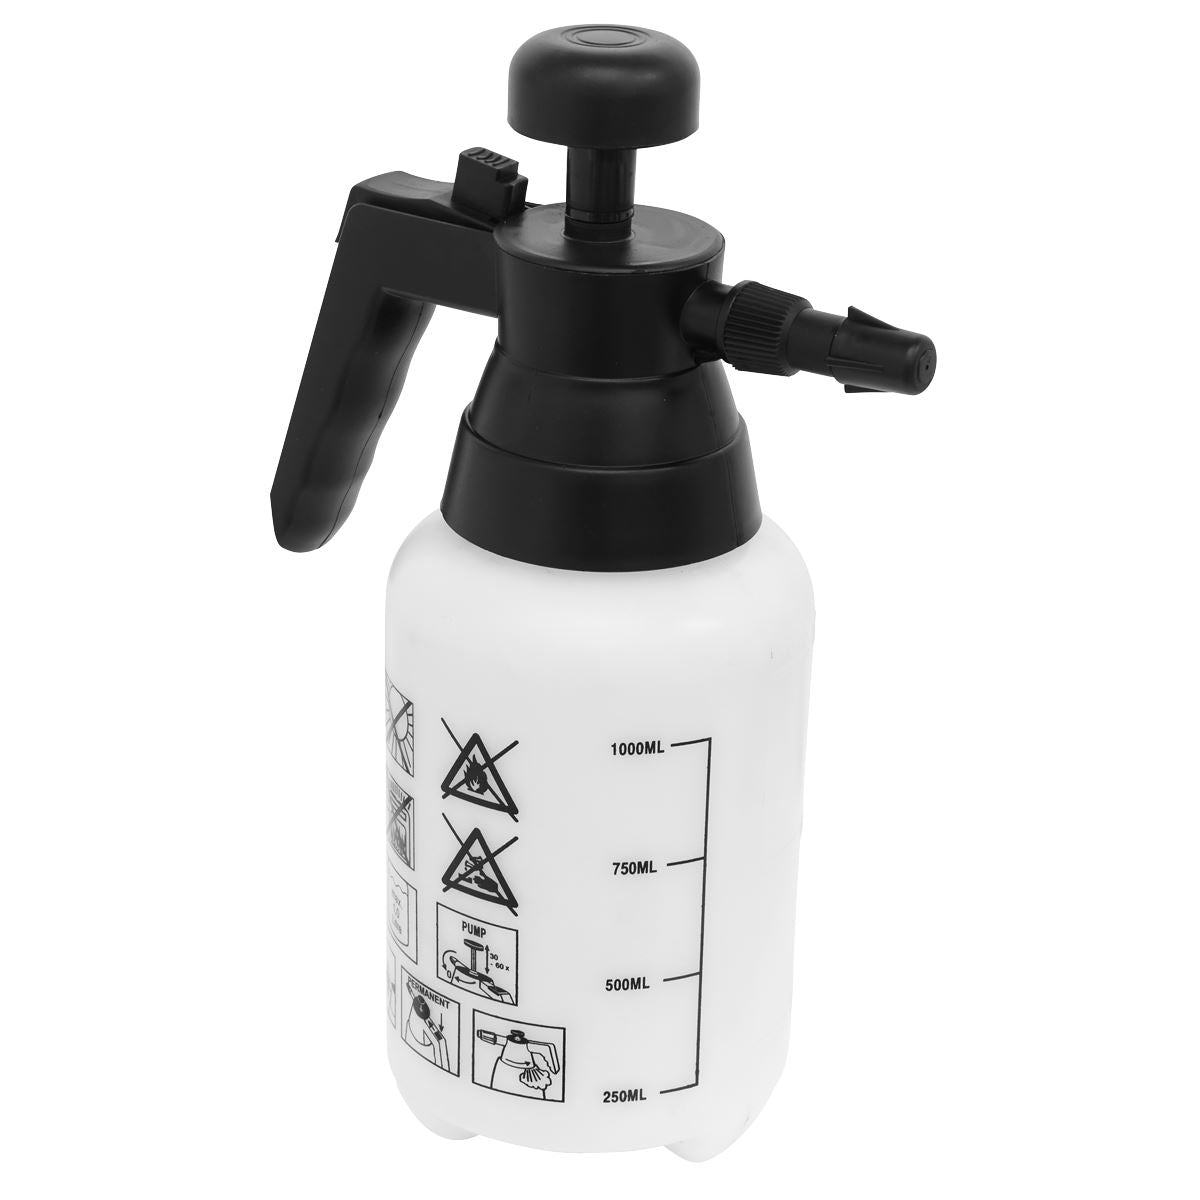 Sealey Pressure Sprayer with Viton Seals 1L SCSG02